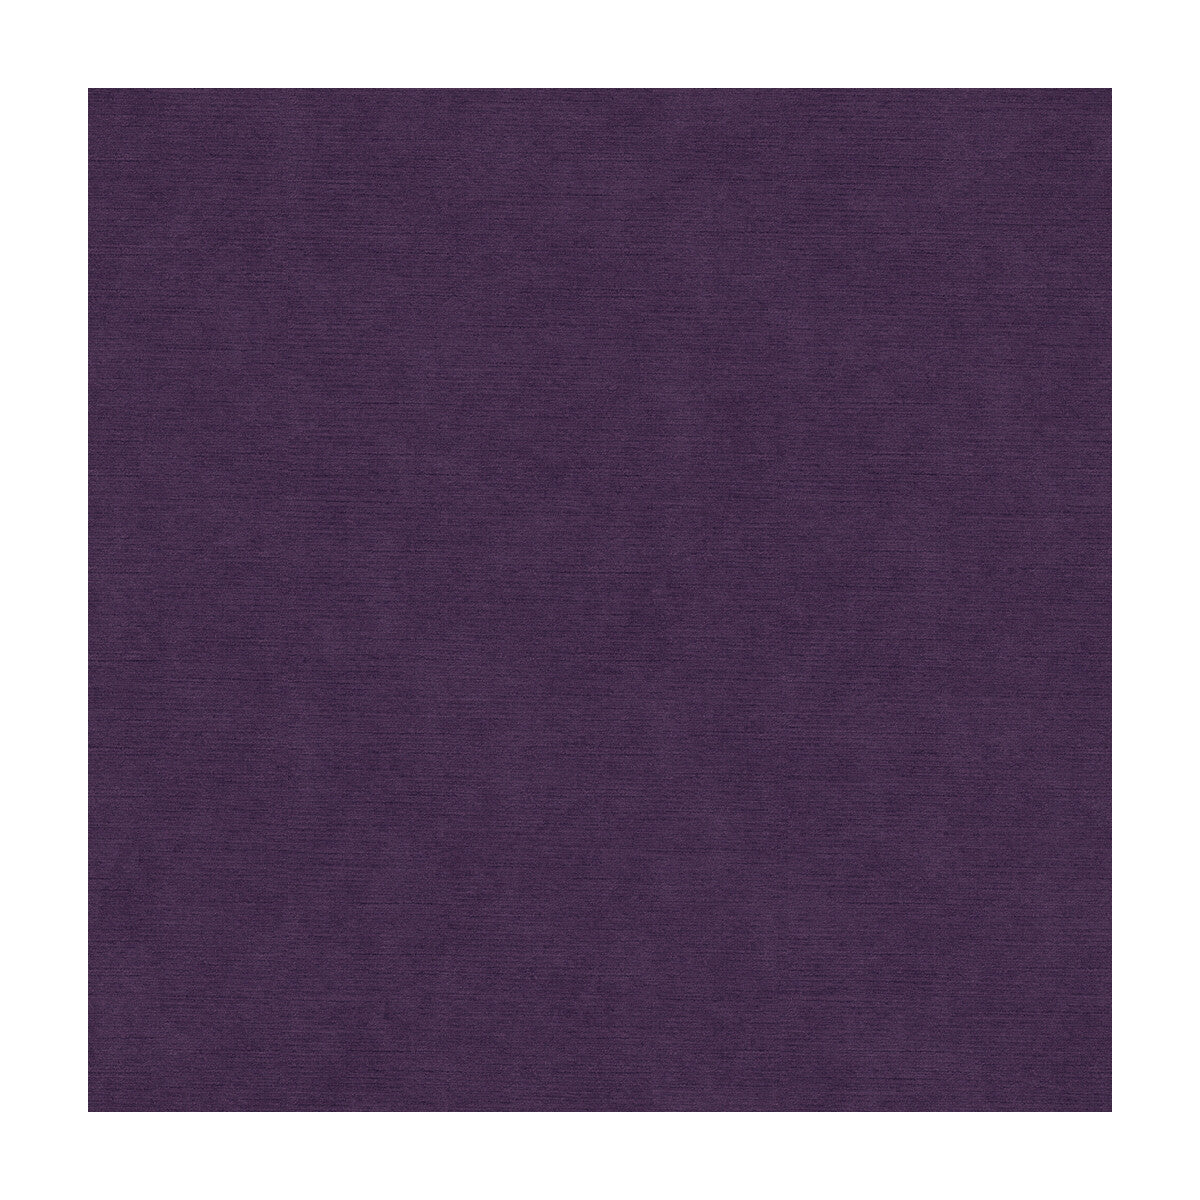 Venetian fabric in plum color - pattern 31326.10.0 - by Kravet Design